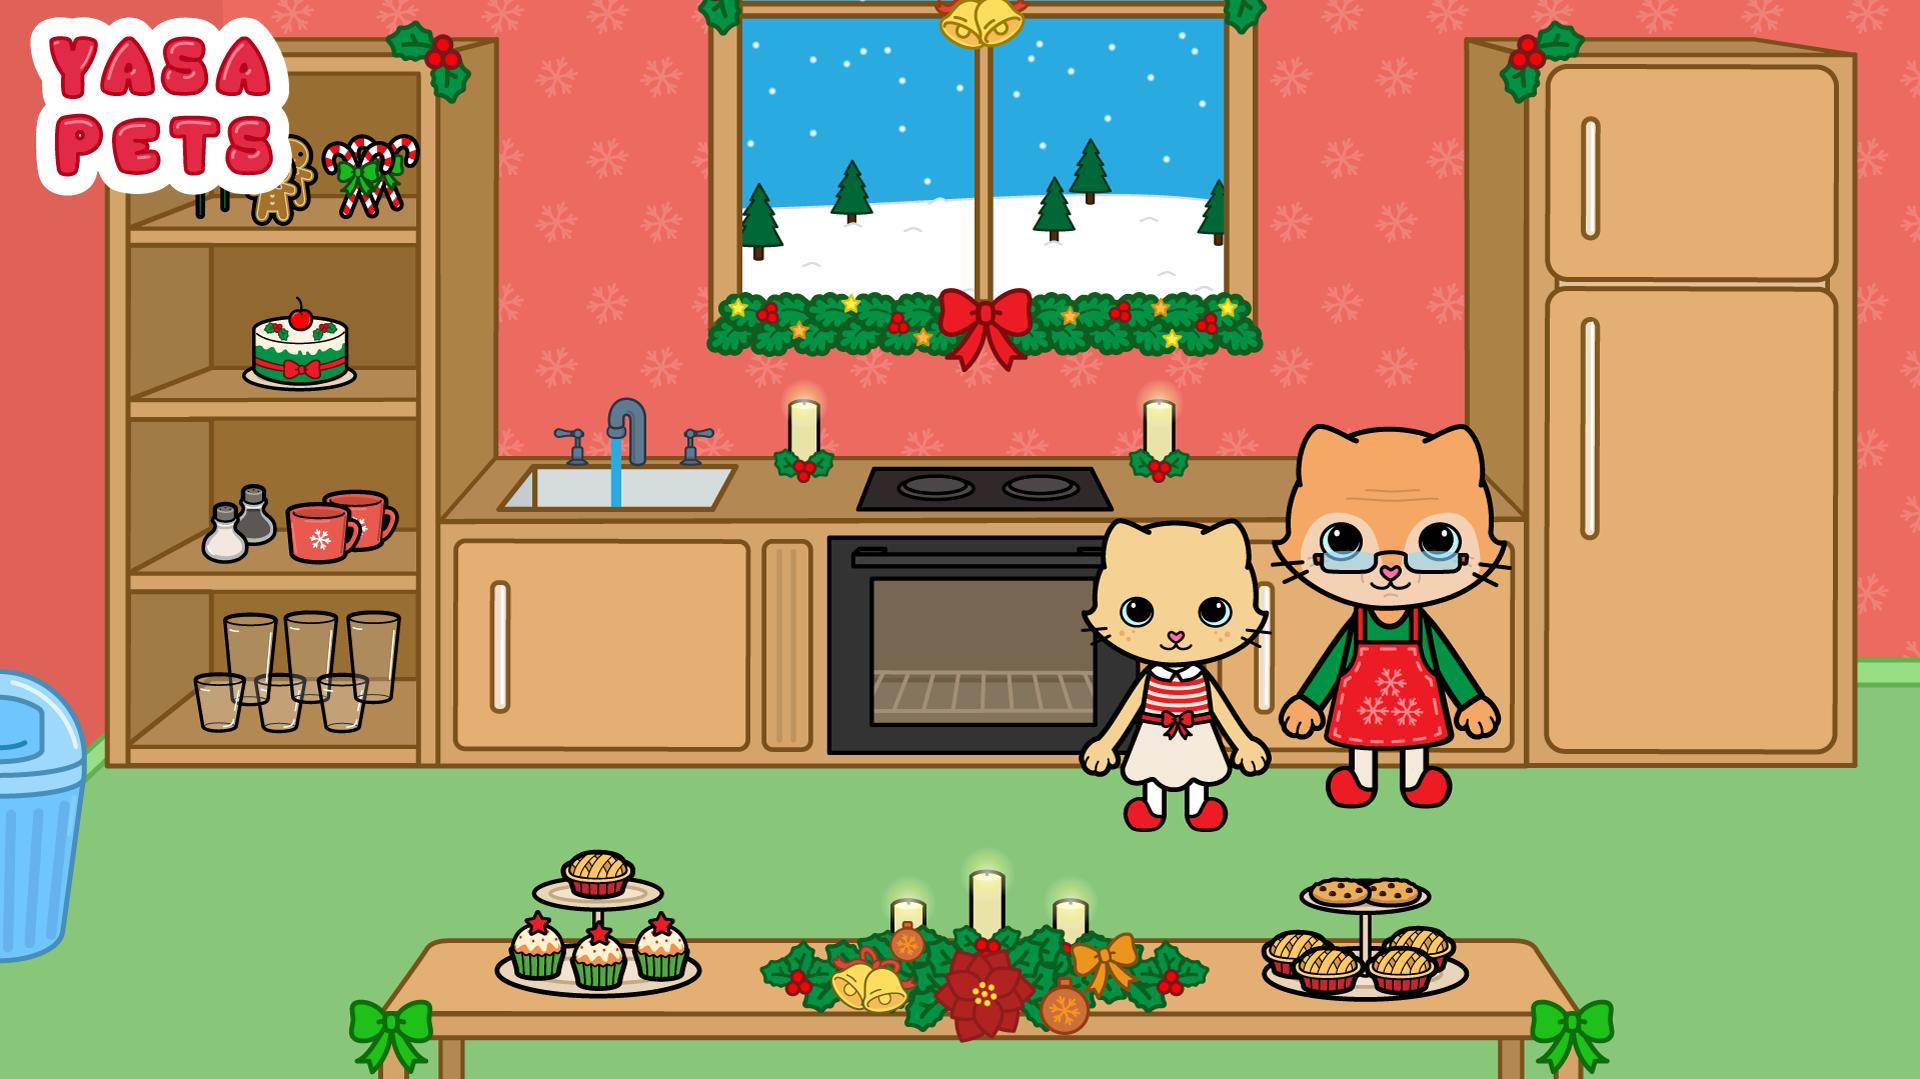 Yasa Pets Christmas 1.1 Screenshot 7